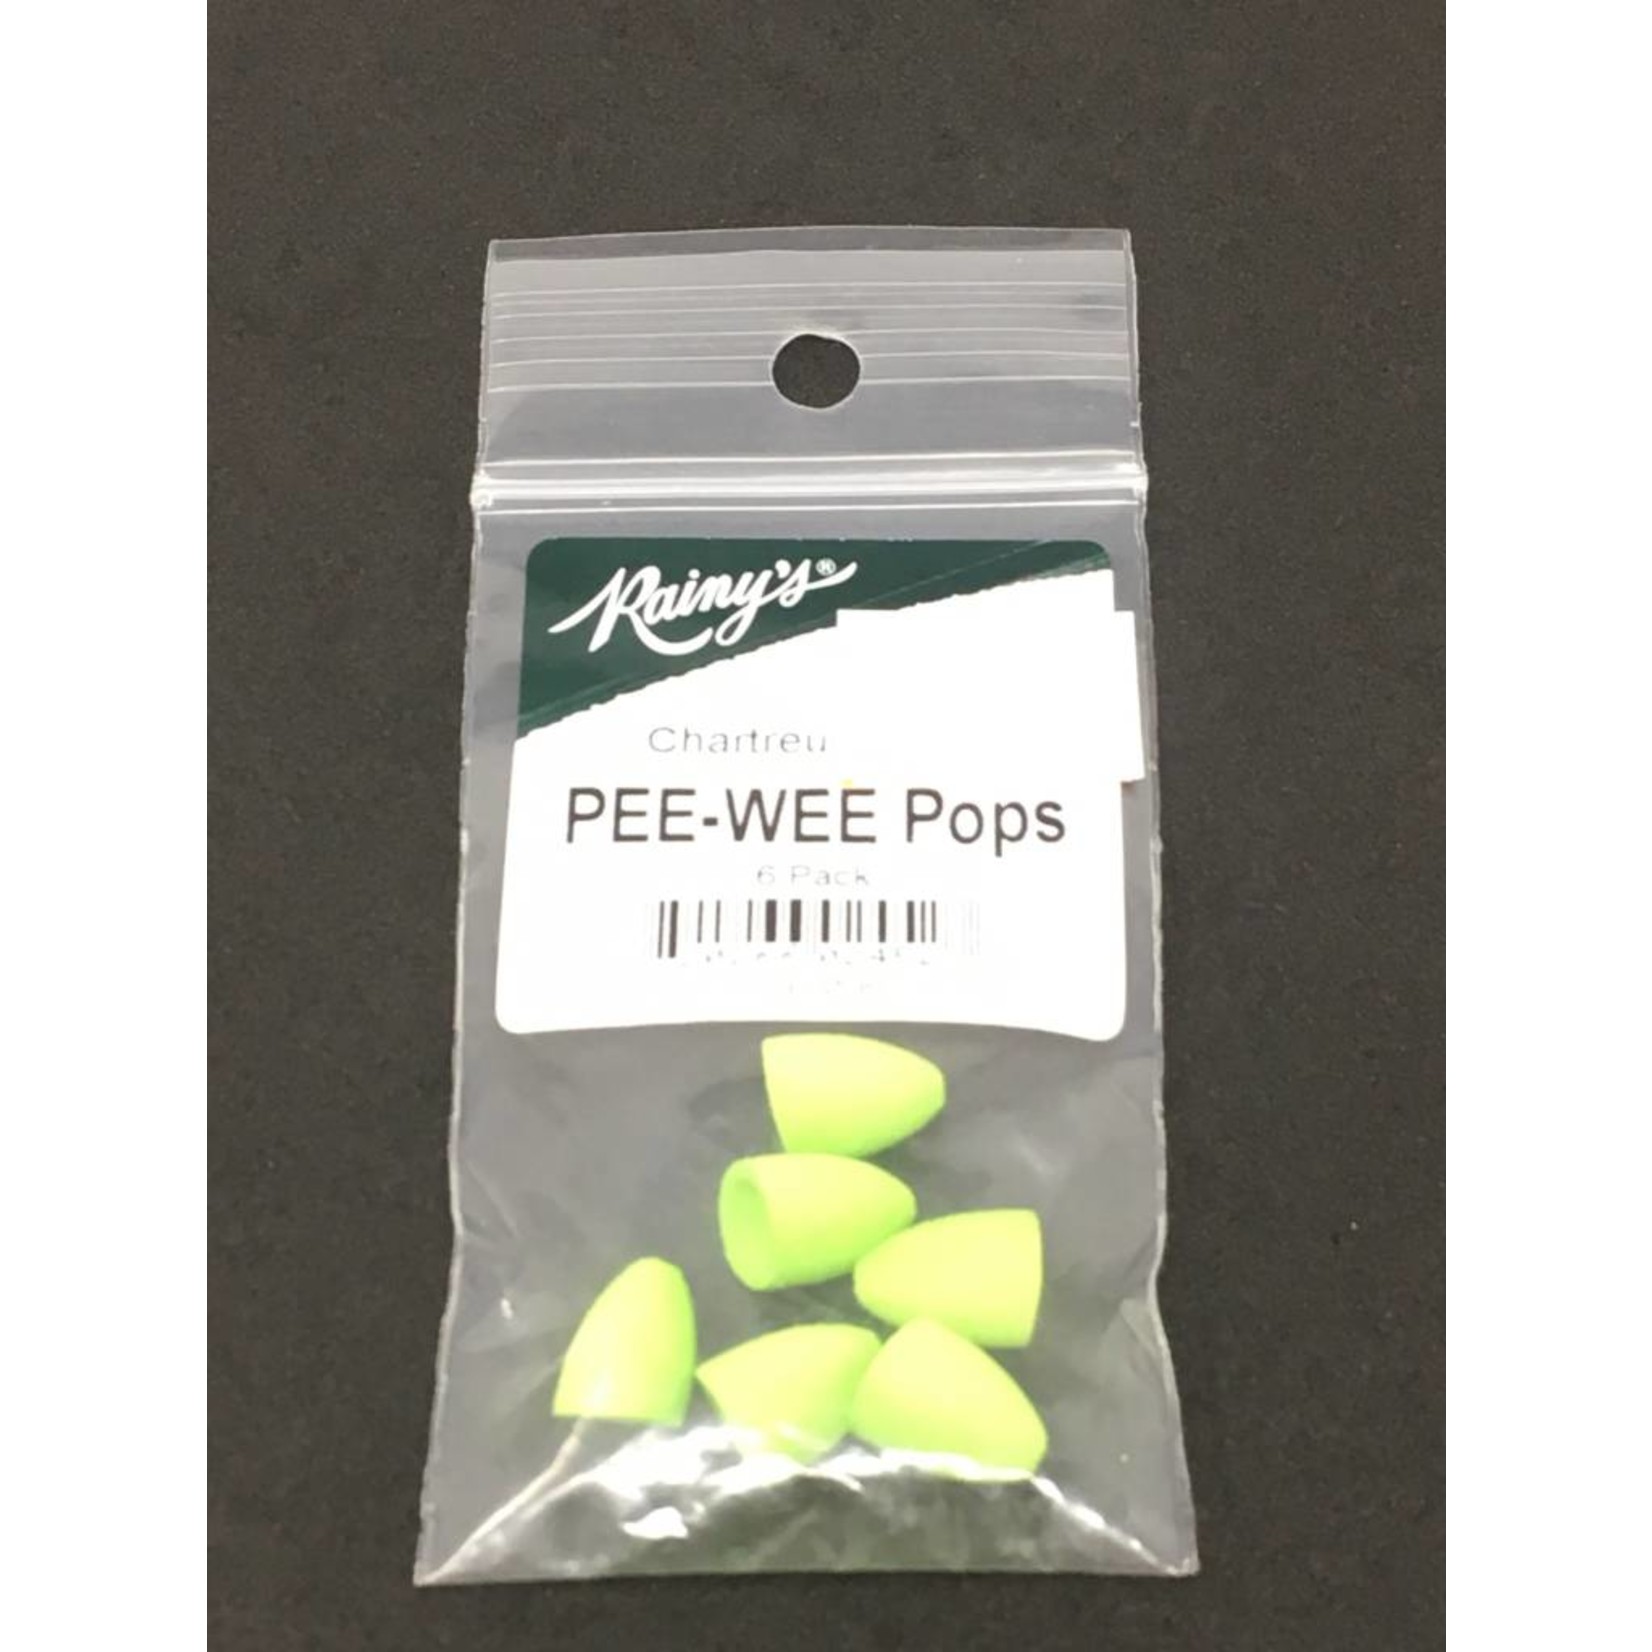 Rainy's Pee-Wee Pops - Chartreuse #4 Hook